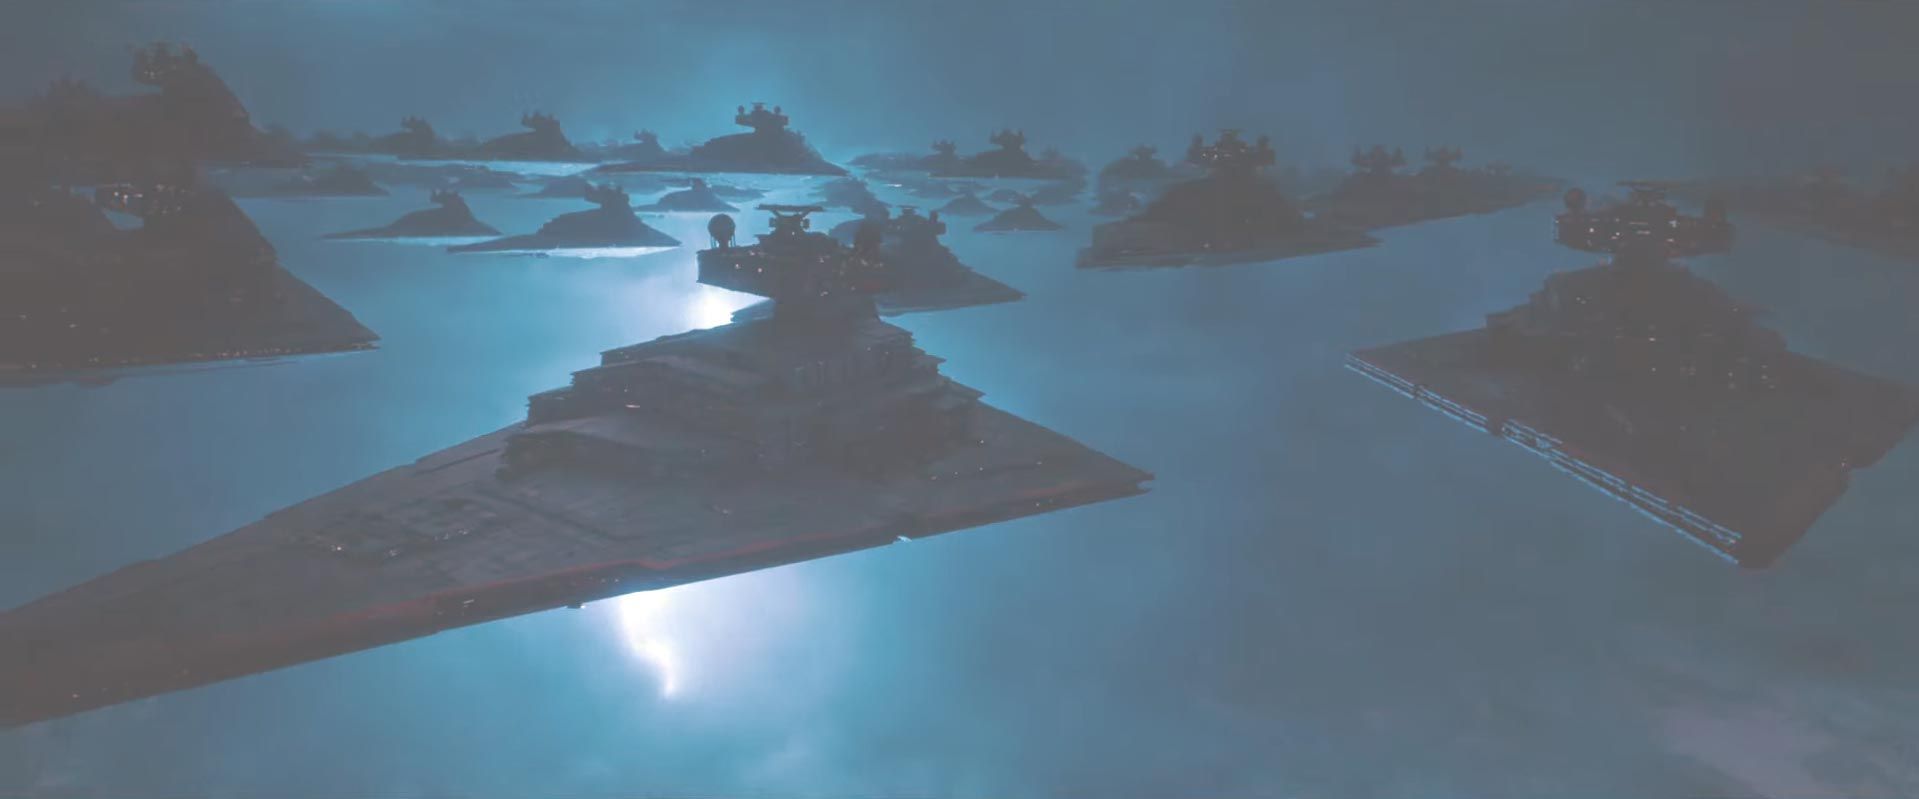 star wars sith fleet